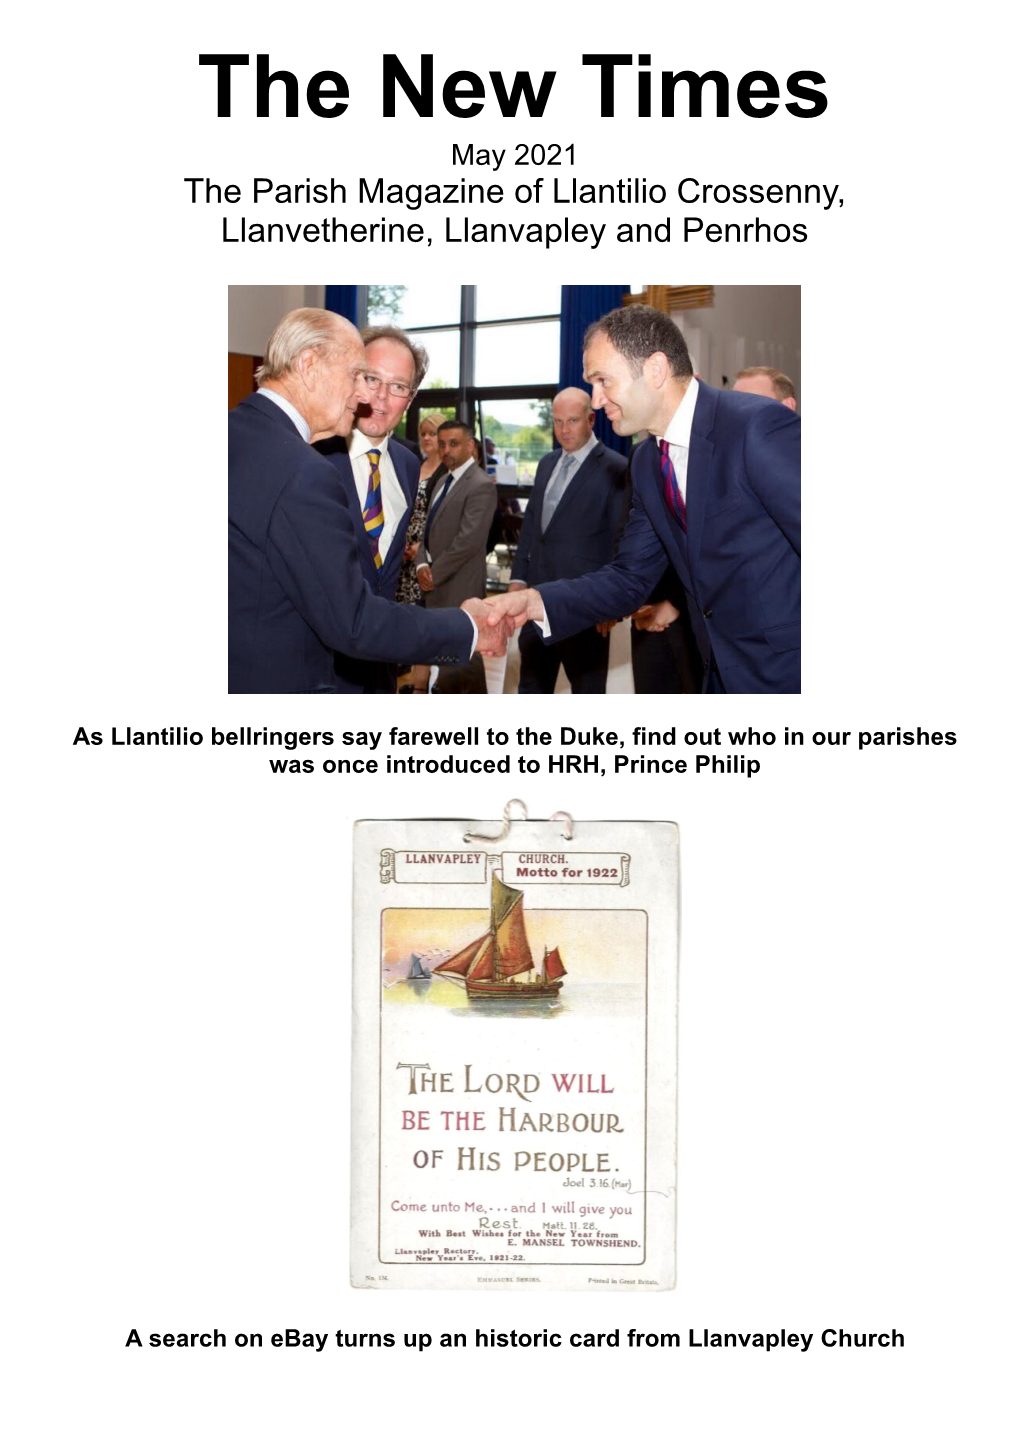 The New Times May 2021 the Parish Magazine of Llantilio Crossenny, Llanvetherine, Llanvapley and Penrhos